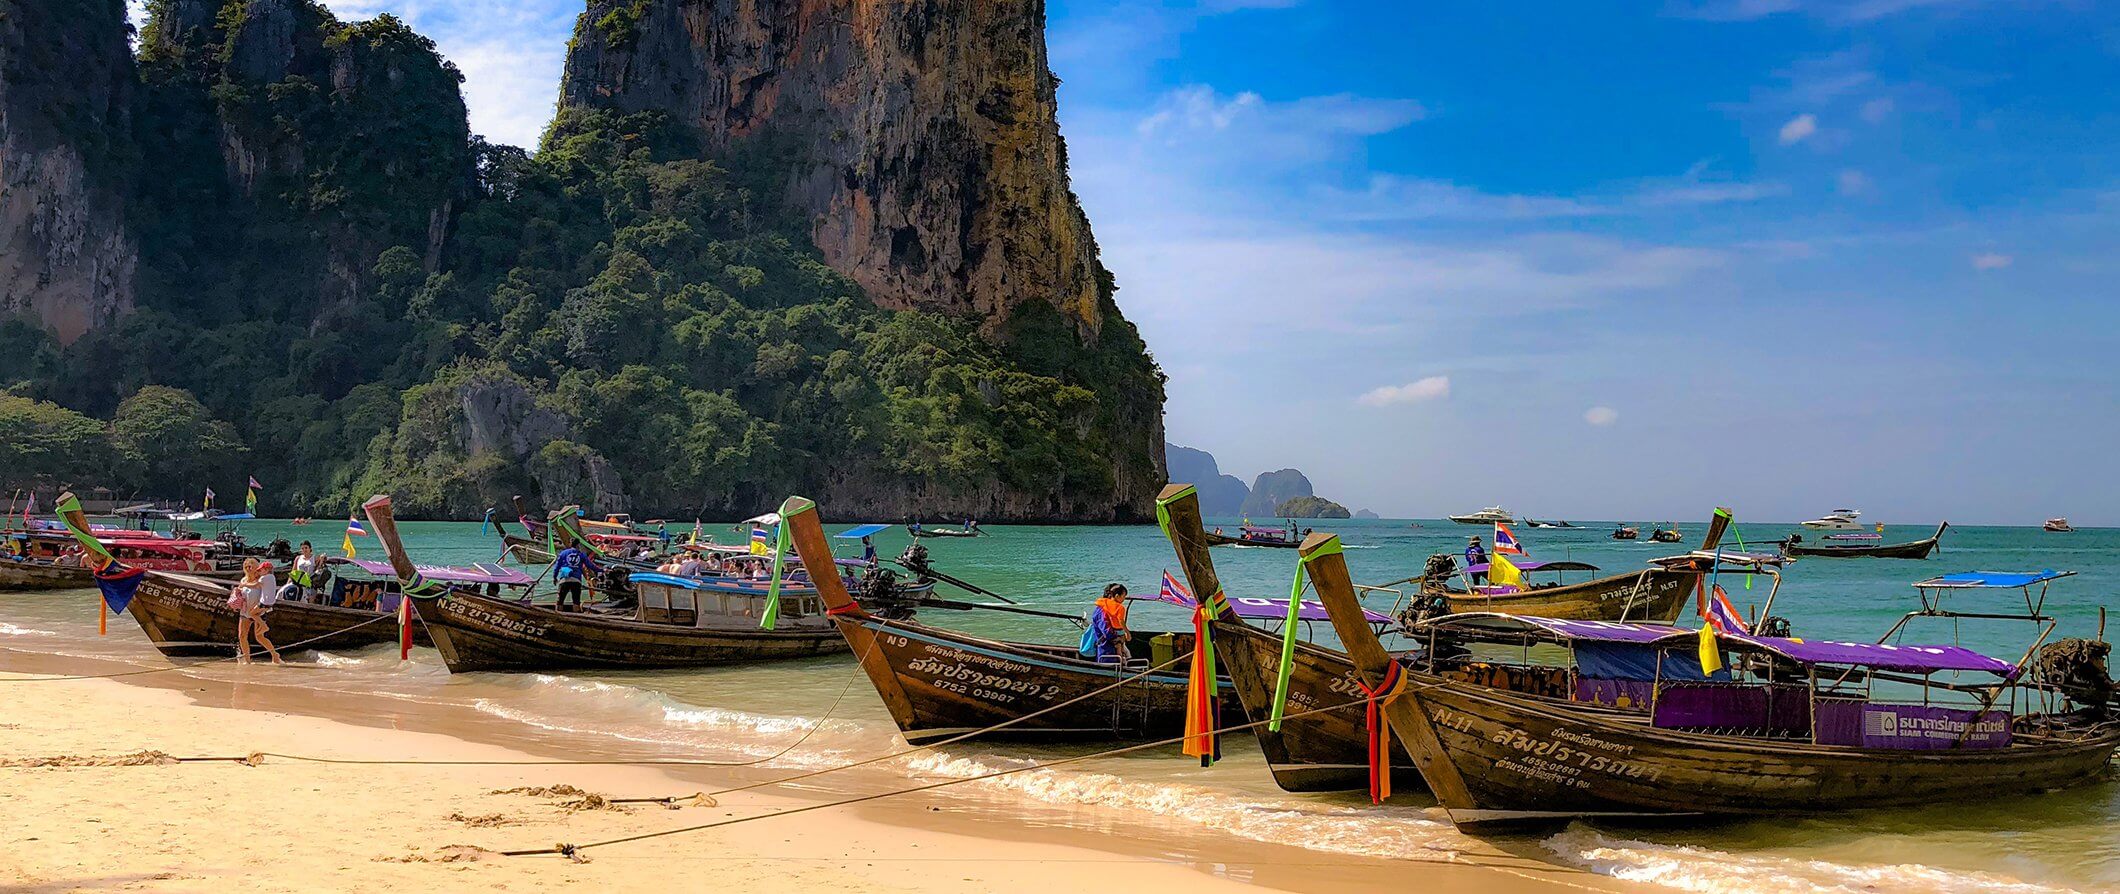 NEW POSTER Krabi Beach Thailand Travel Beach Ocean Boats Vacation Paradise